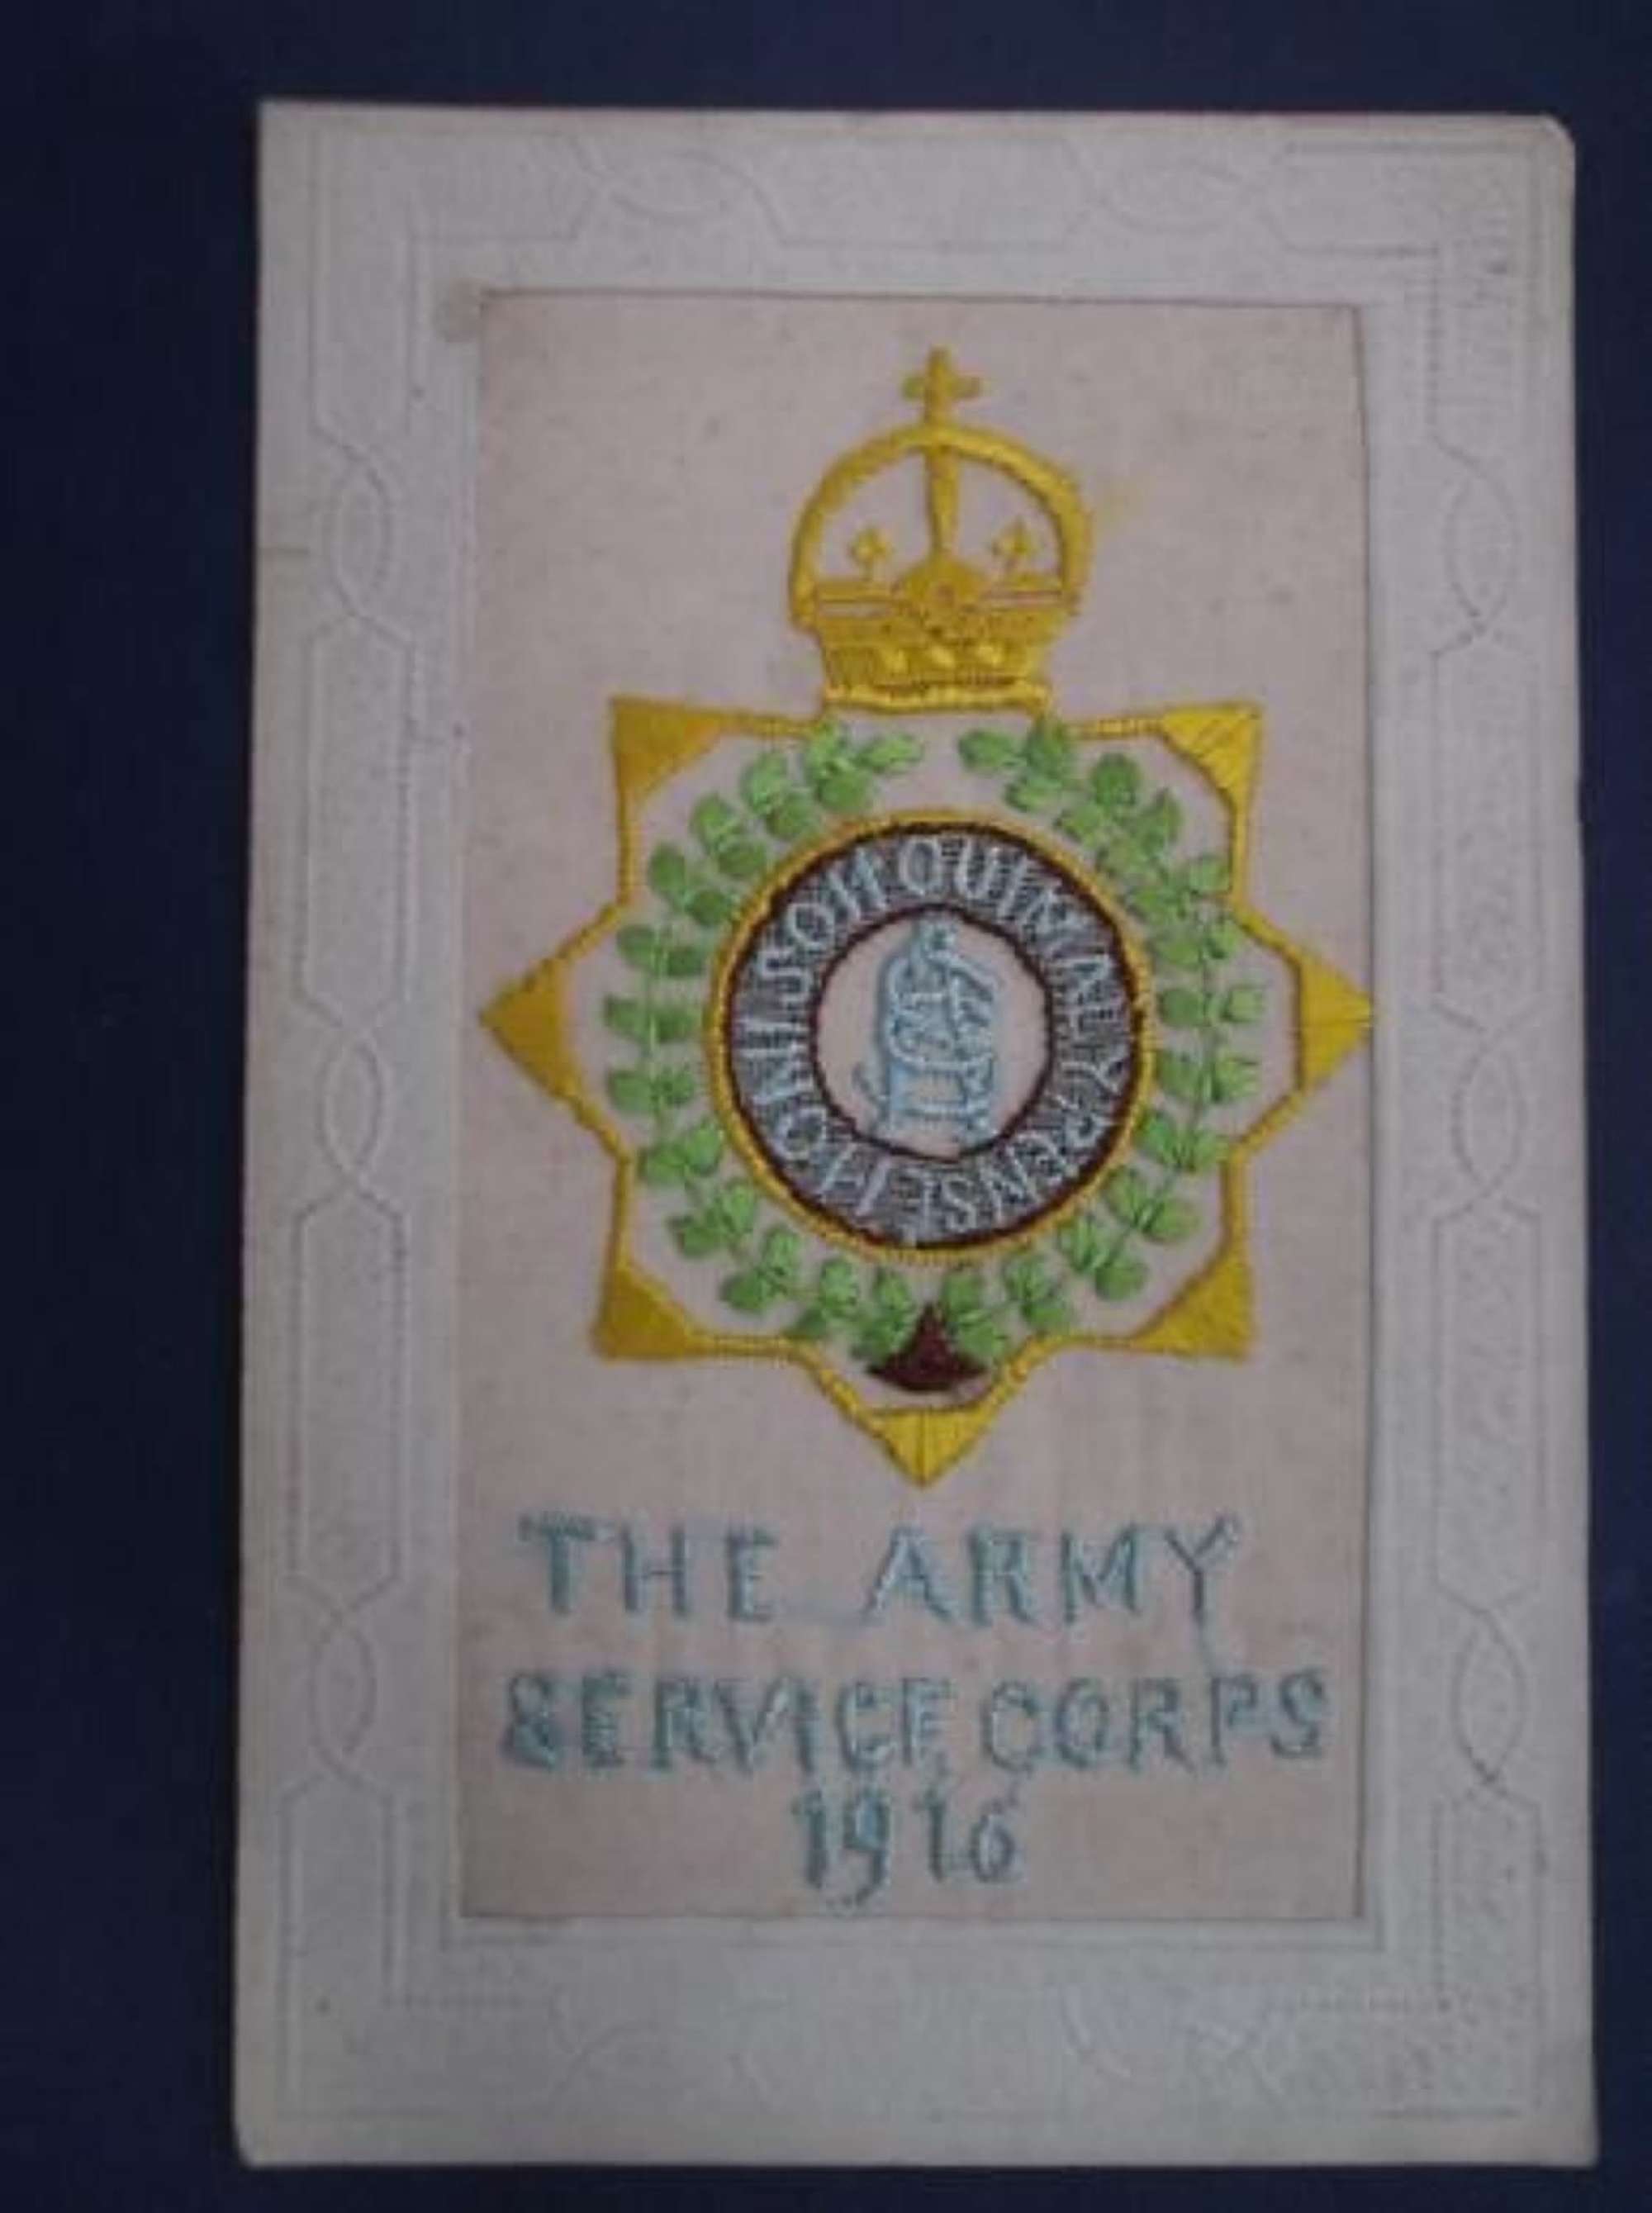 ARMY SERVICE CORPS 1916 SILK POSTCARD